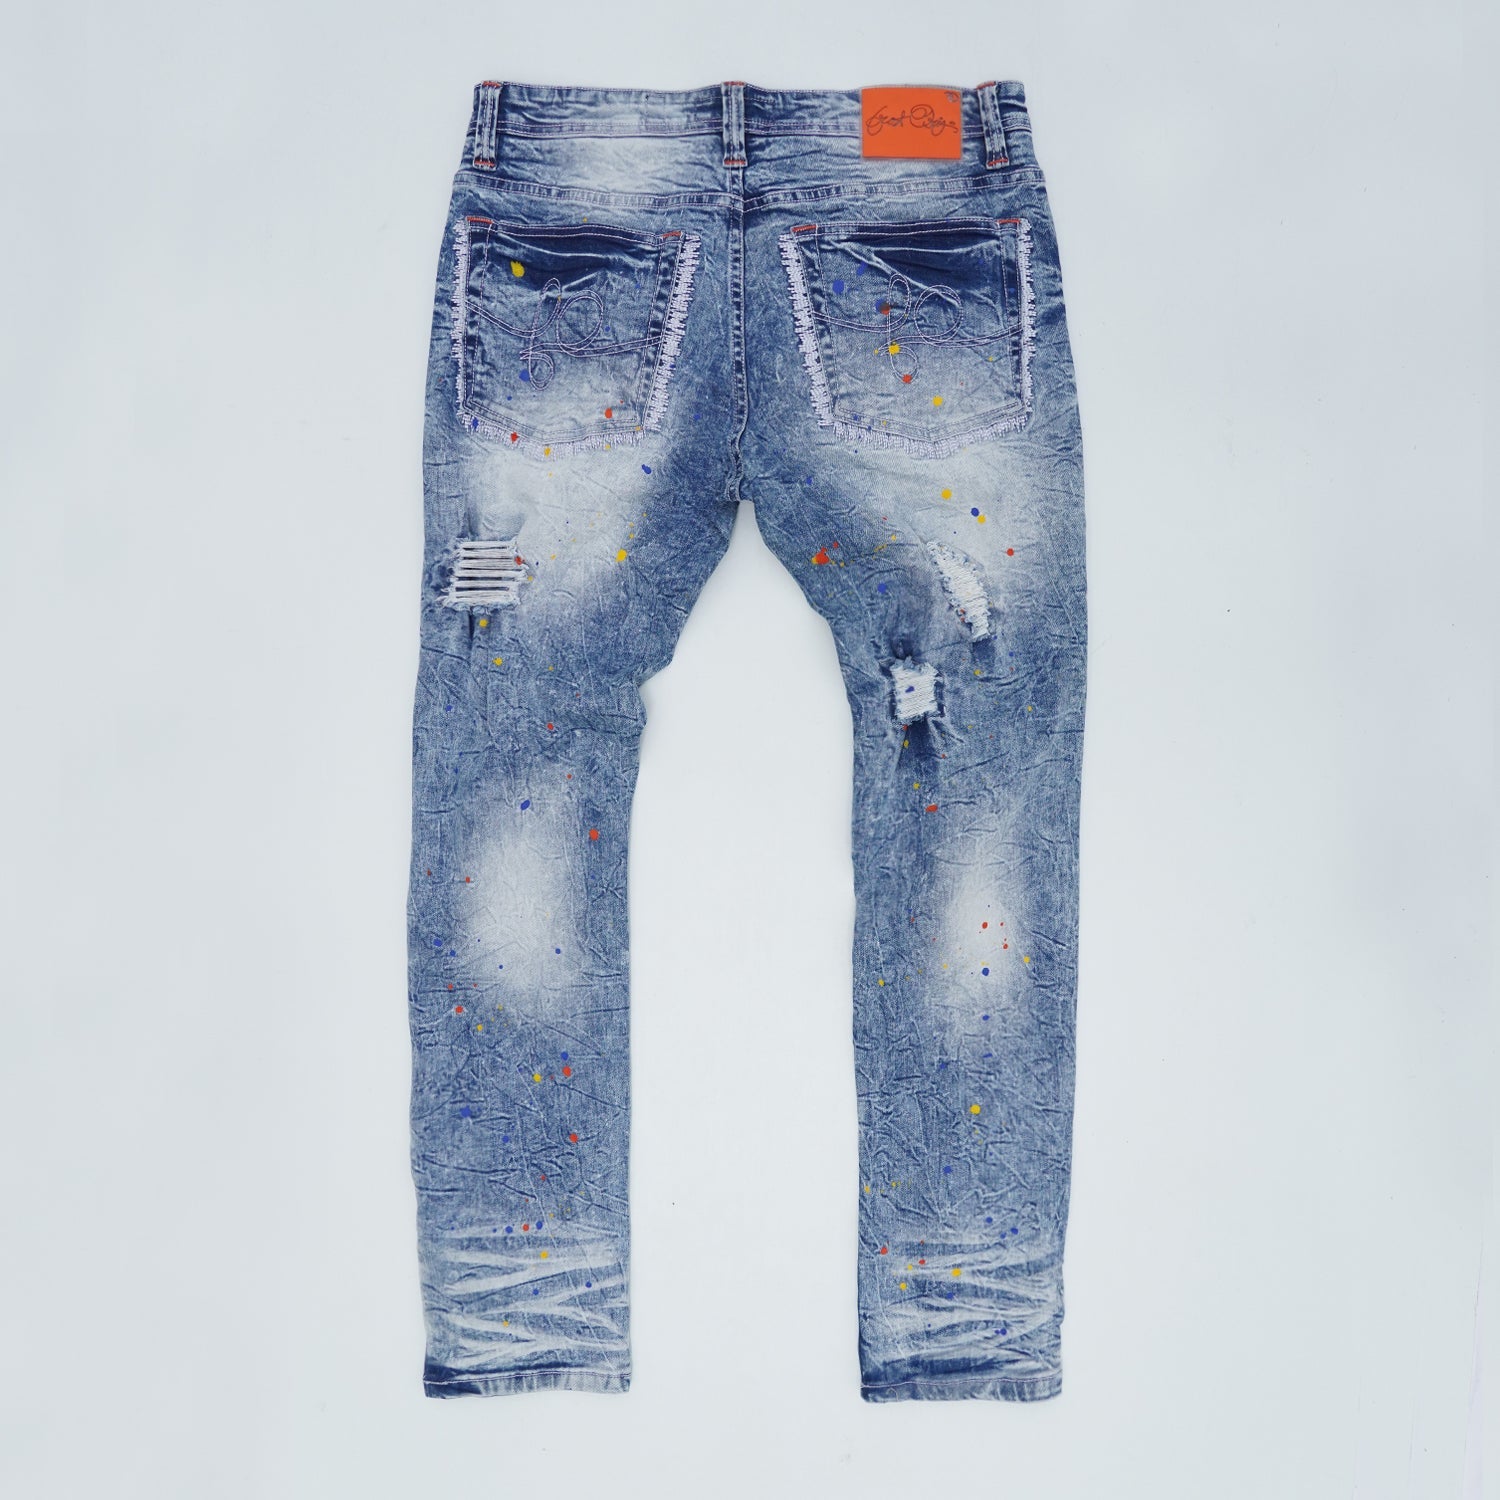 F1778  Frost Shredded Jeans w/ paint - Light Wash